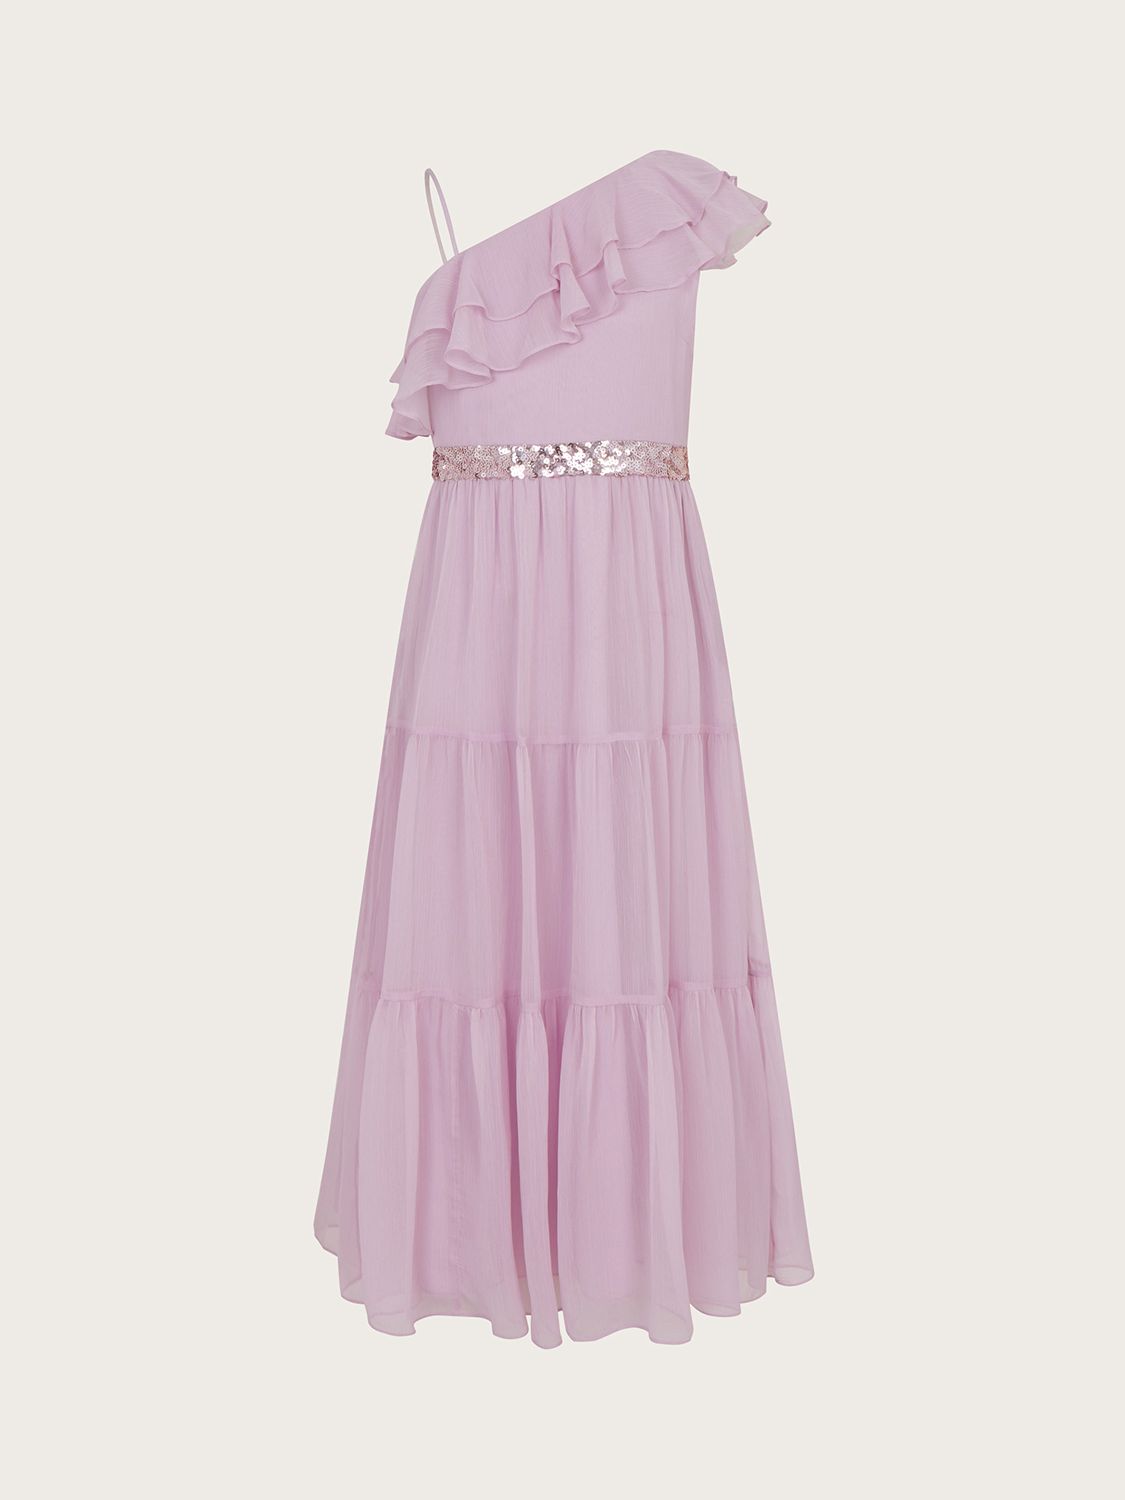 Monsoon Kids' Ruby Ruffled Dress, Lilac at John Lewis & Partners